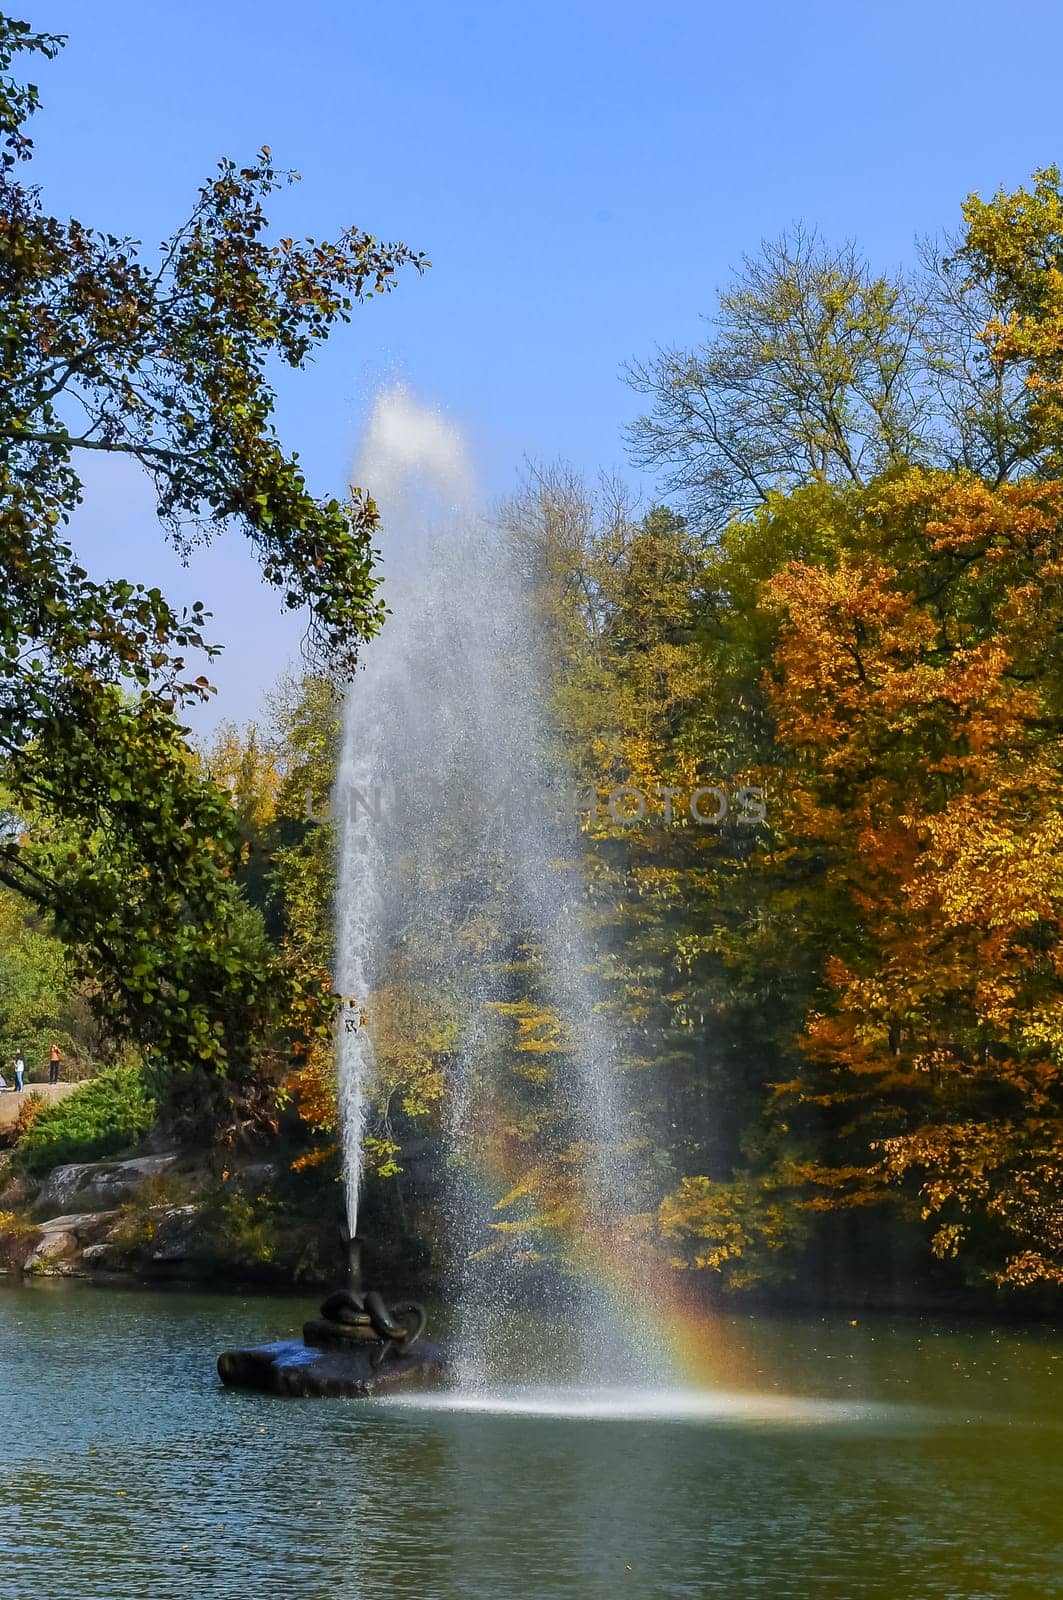 UMAN, UKRAINE - OCTOBER 21, 2012: Large fountain "Snake" in the arboretum Sofiyivka park, Uman